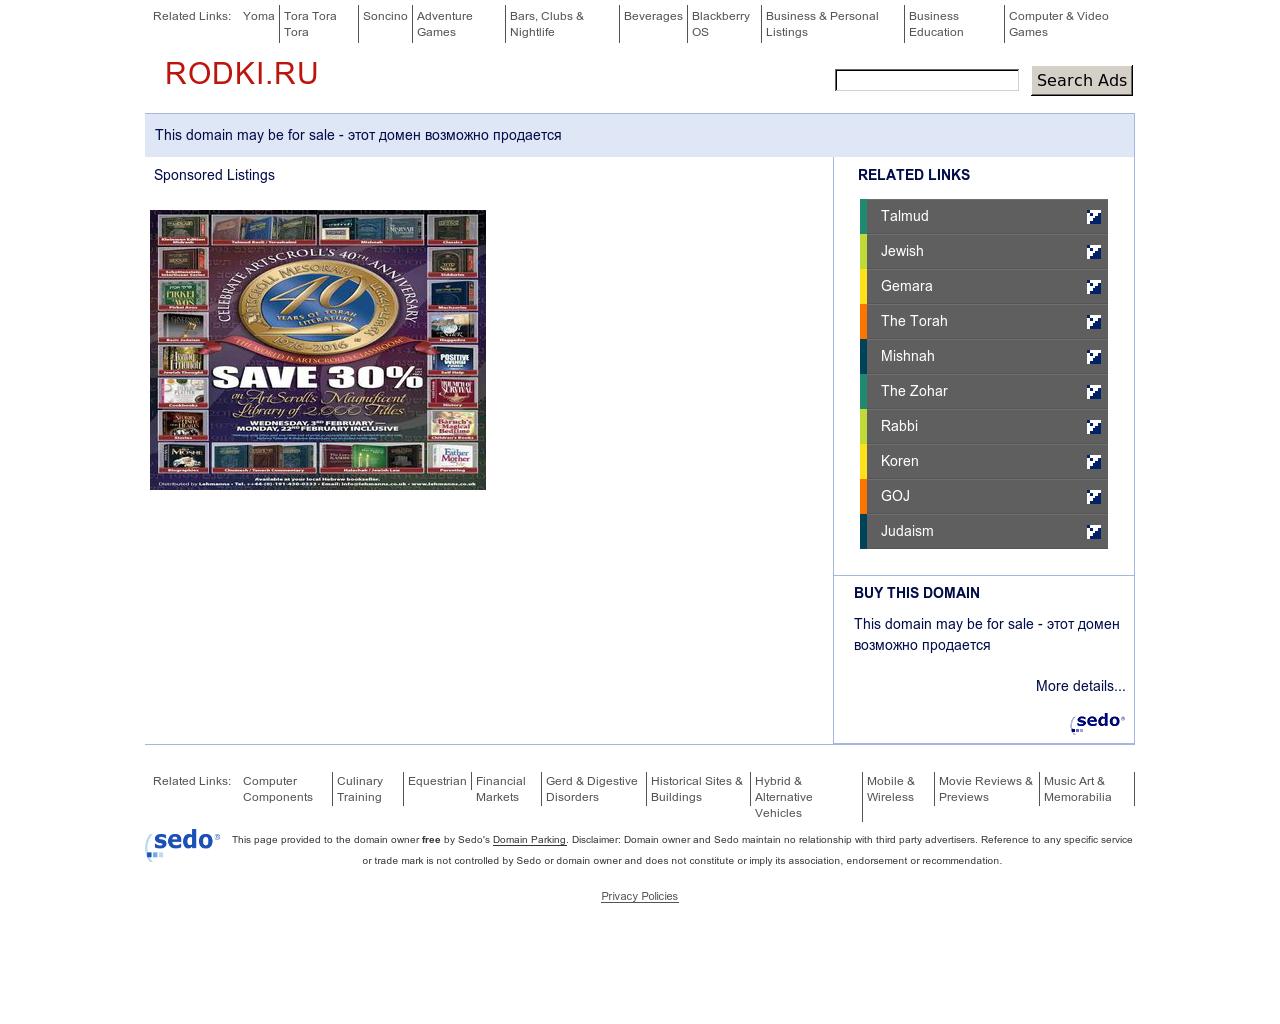 Изображение сайта rodki.ru в разрешении 1280x1024